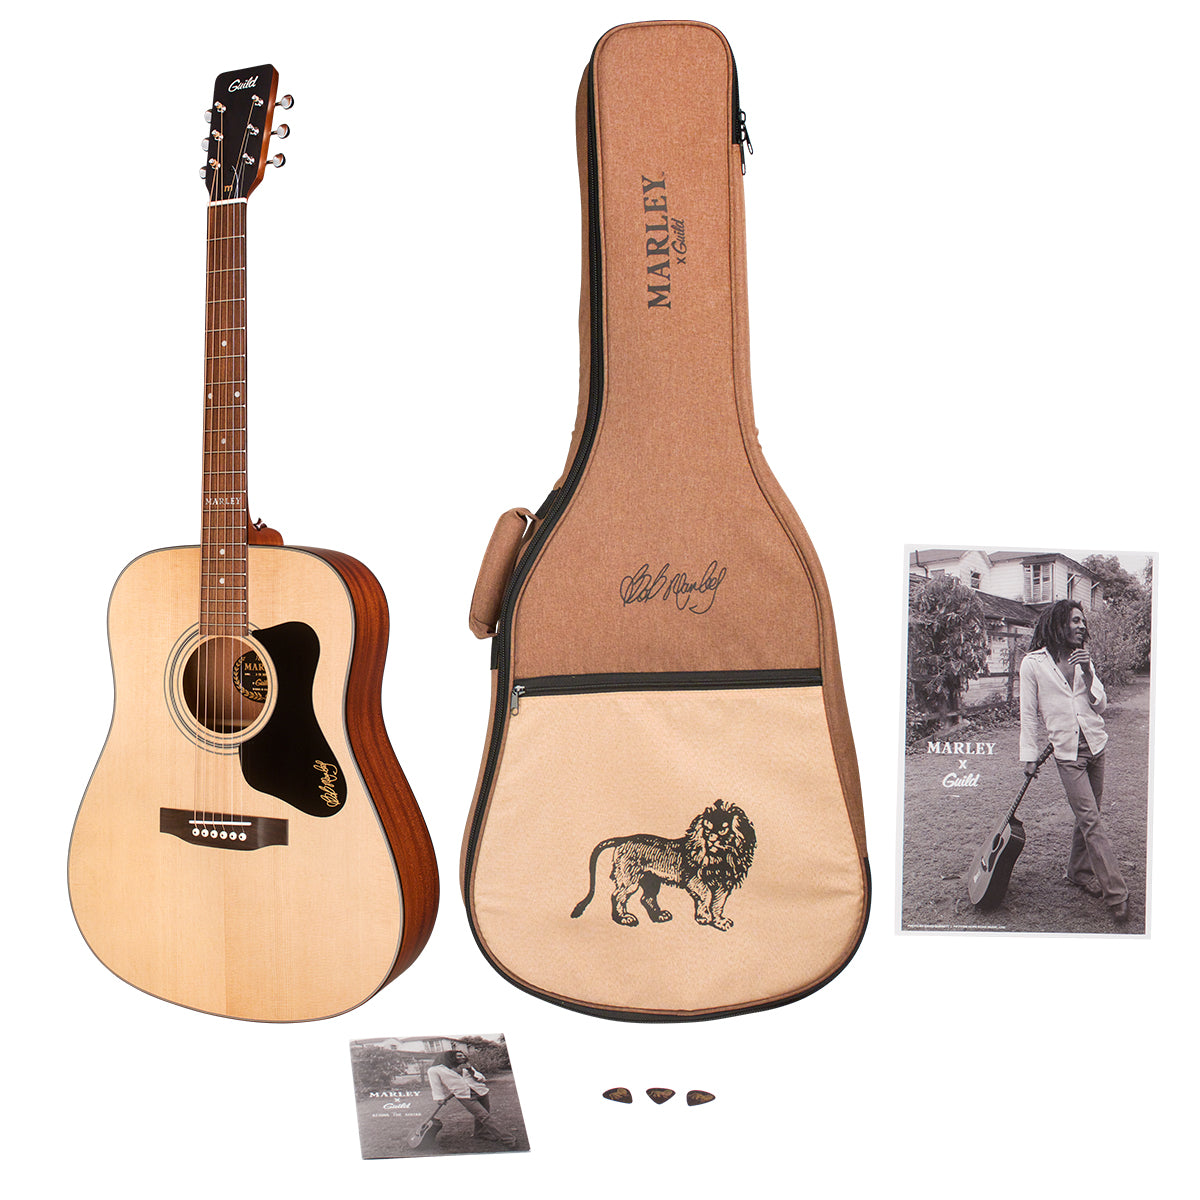 Guild A-20 Bob Marley Acoustic Guitar with Bag - Natural